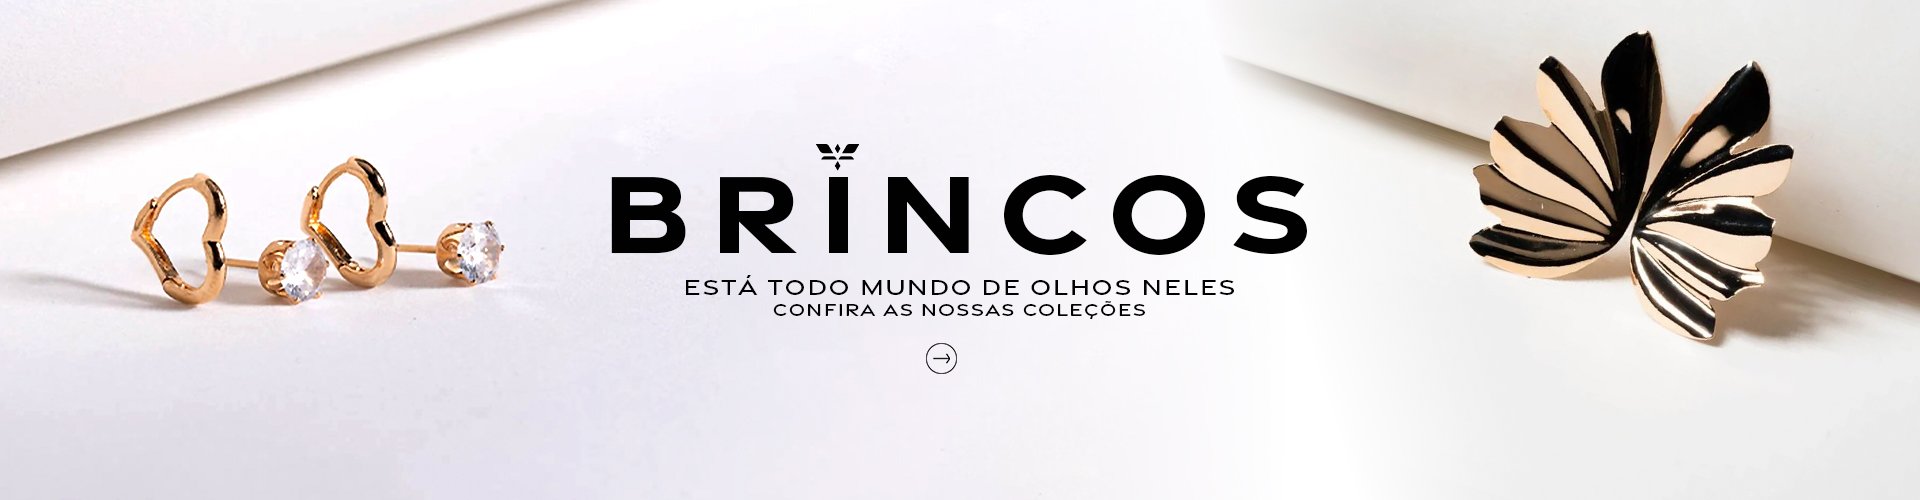 Kit de Brincos